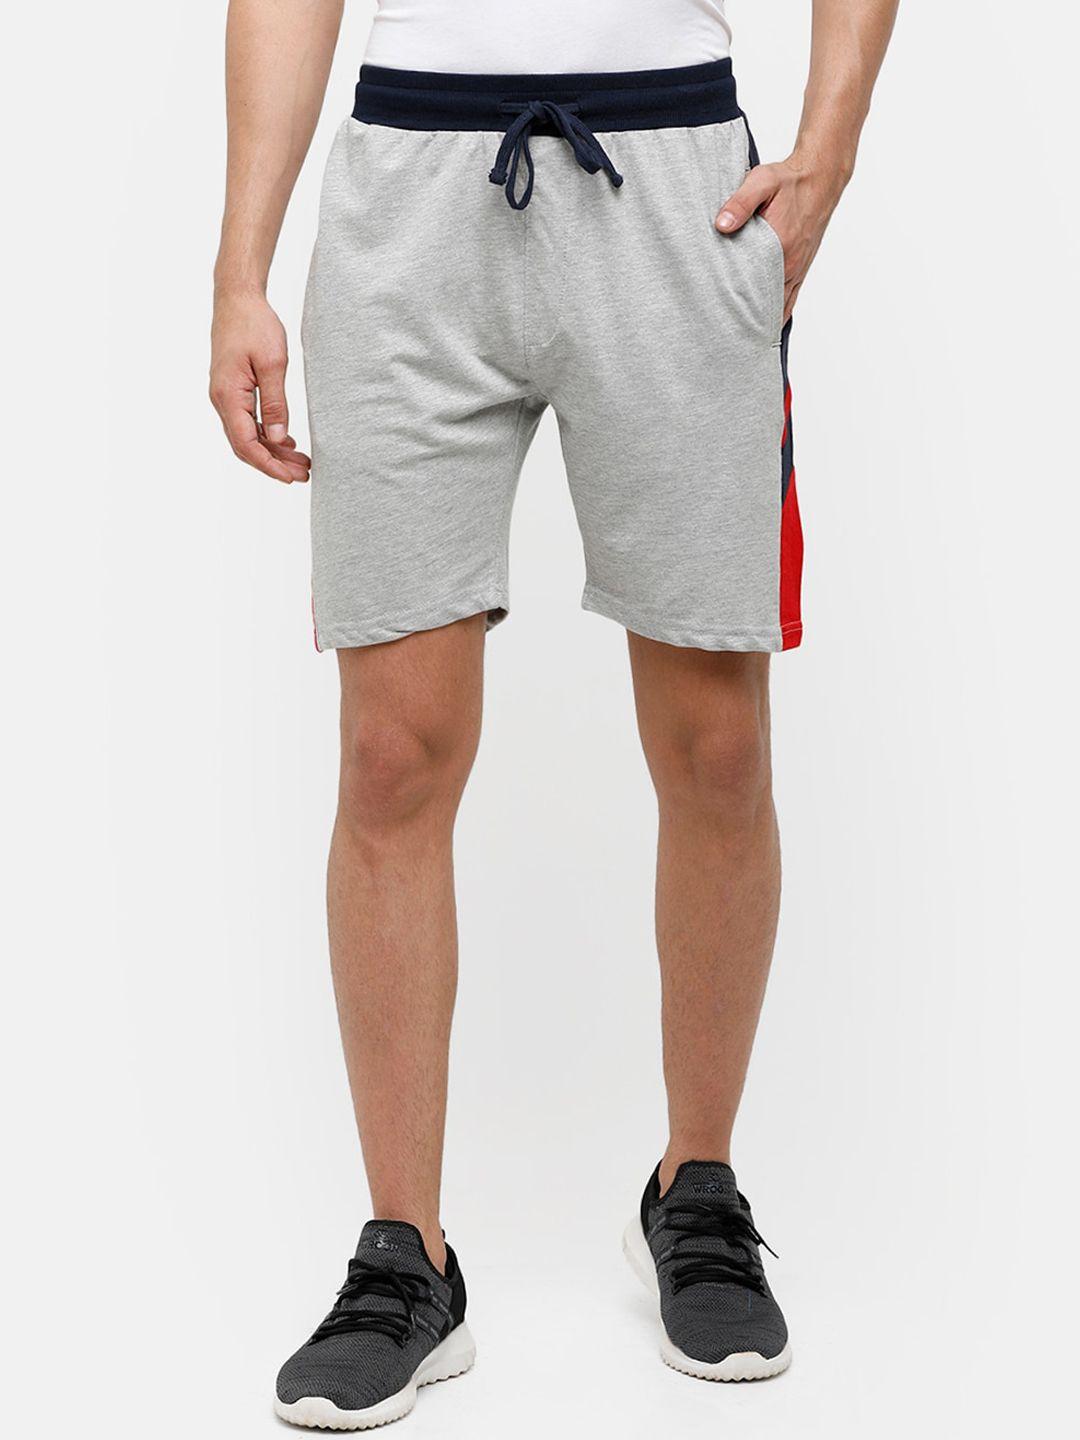 madsto-men-grey-regular-shorts